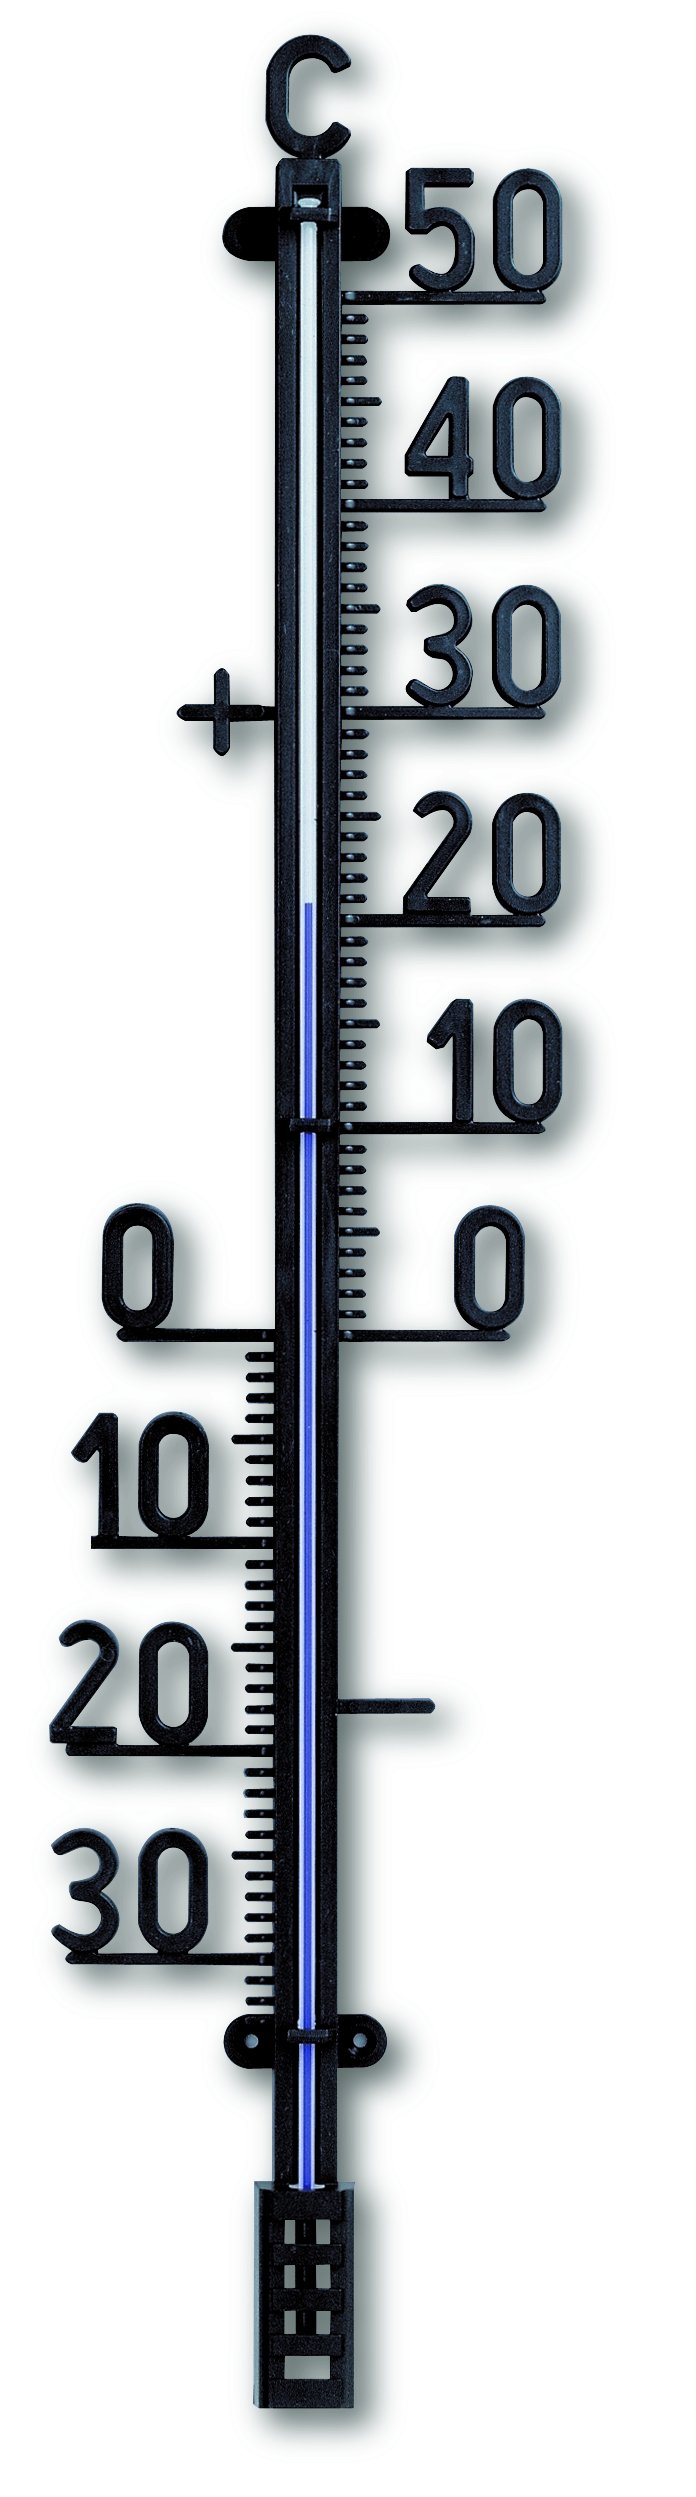 DEUBA® 3x Garten Thermometer mit Celsius Fahrenheit Skala Haushalt